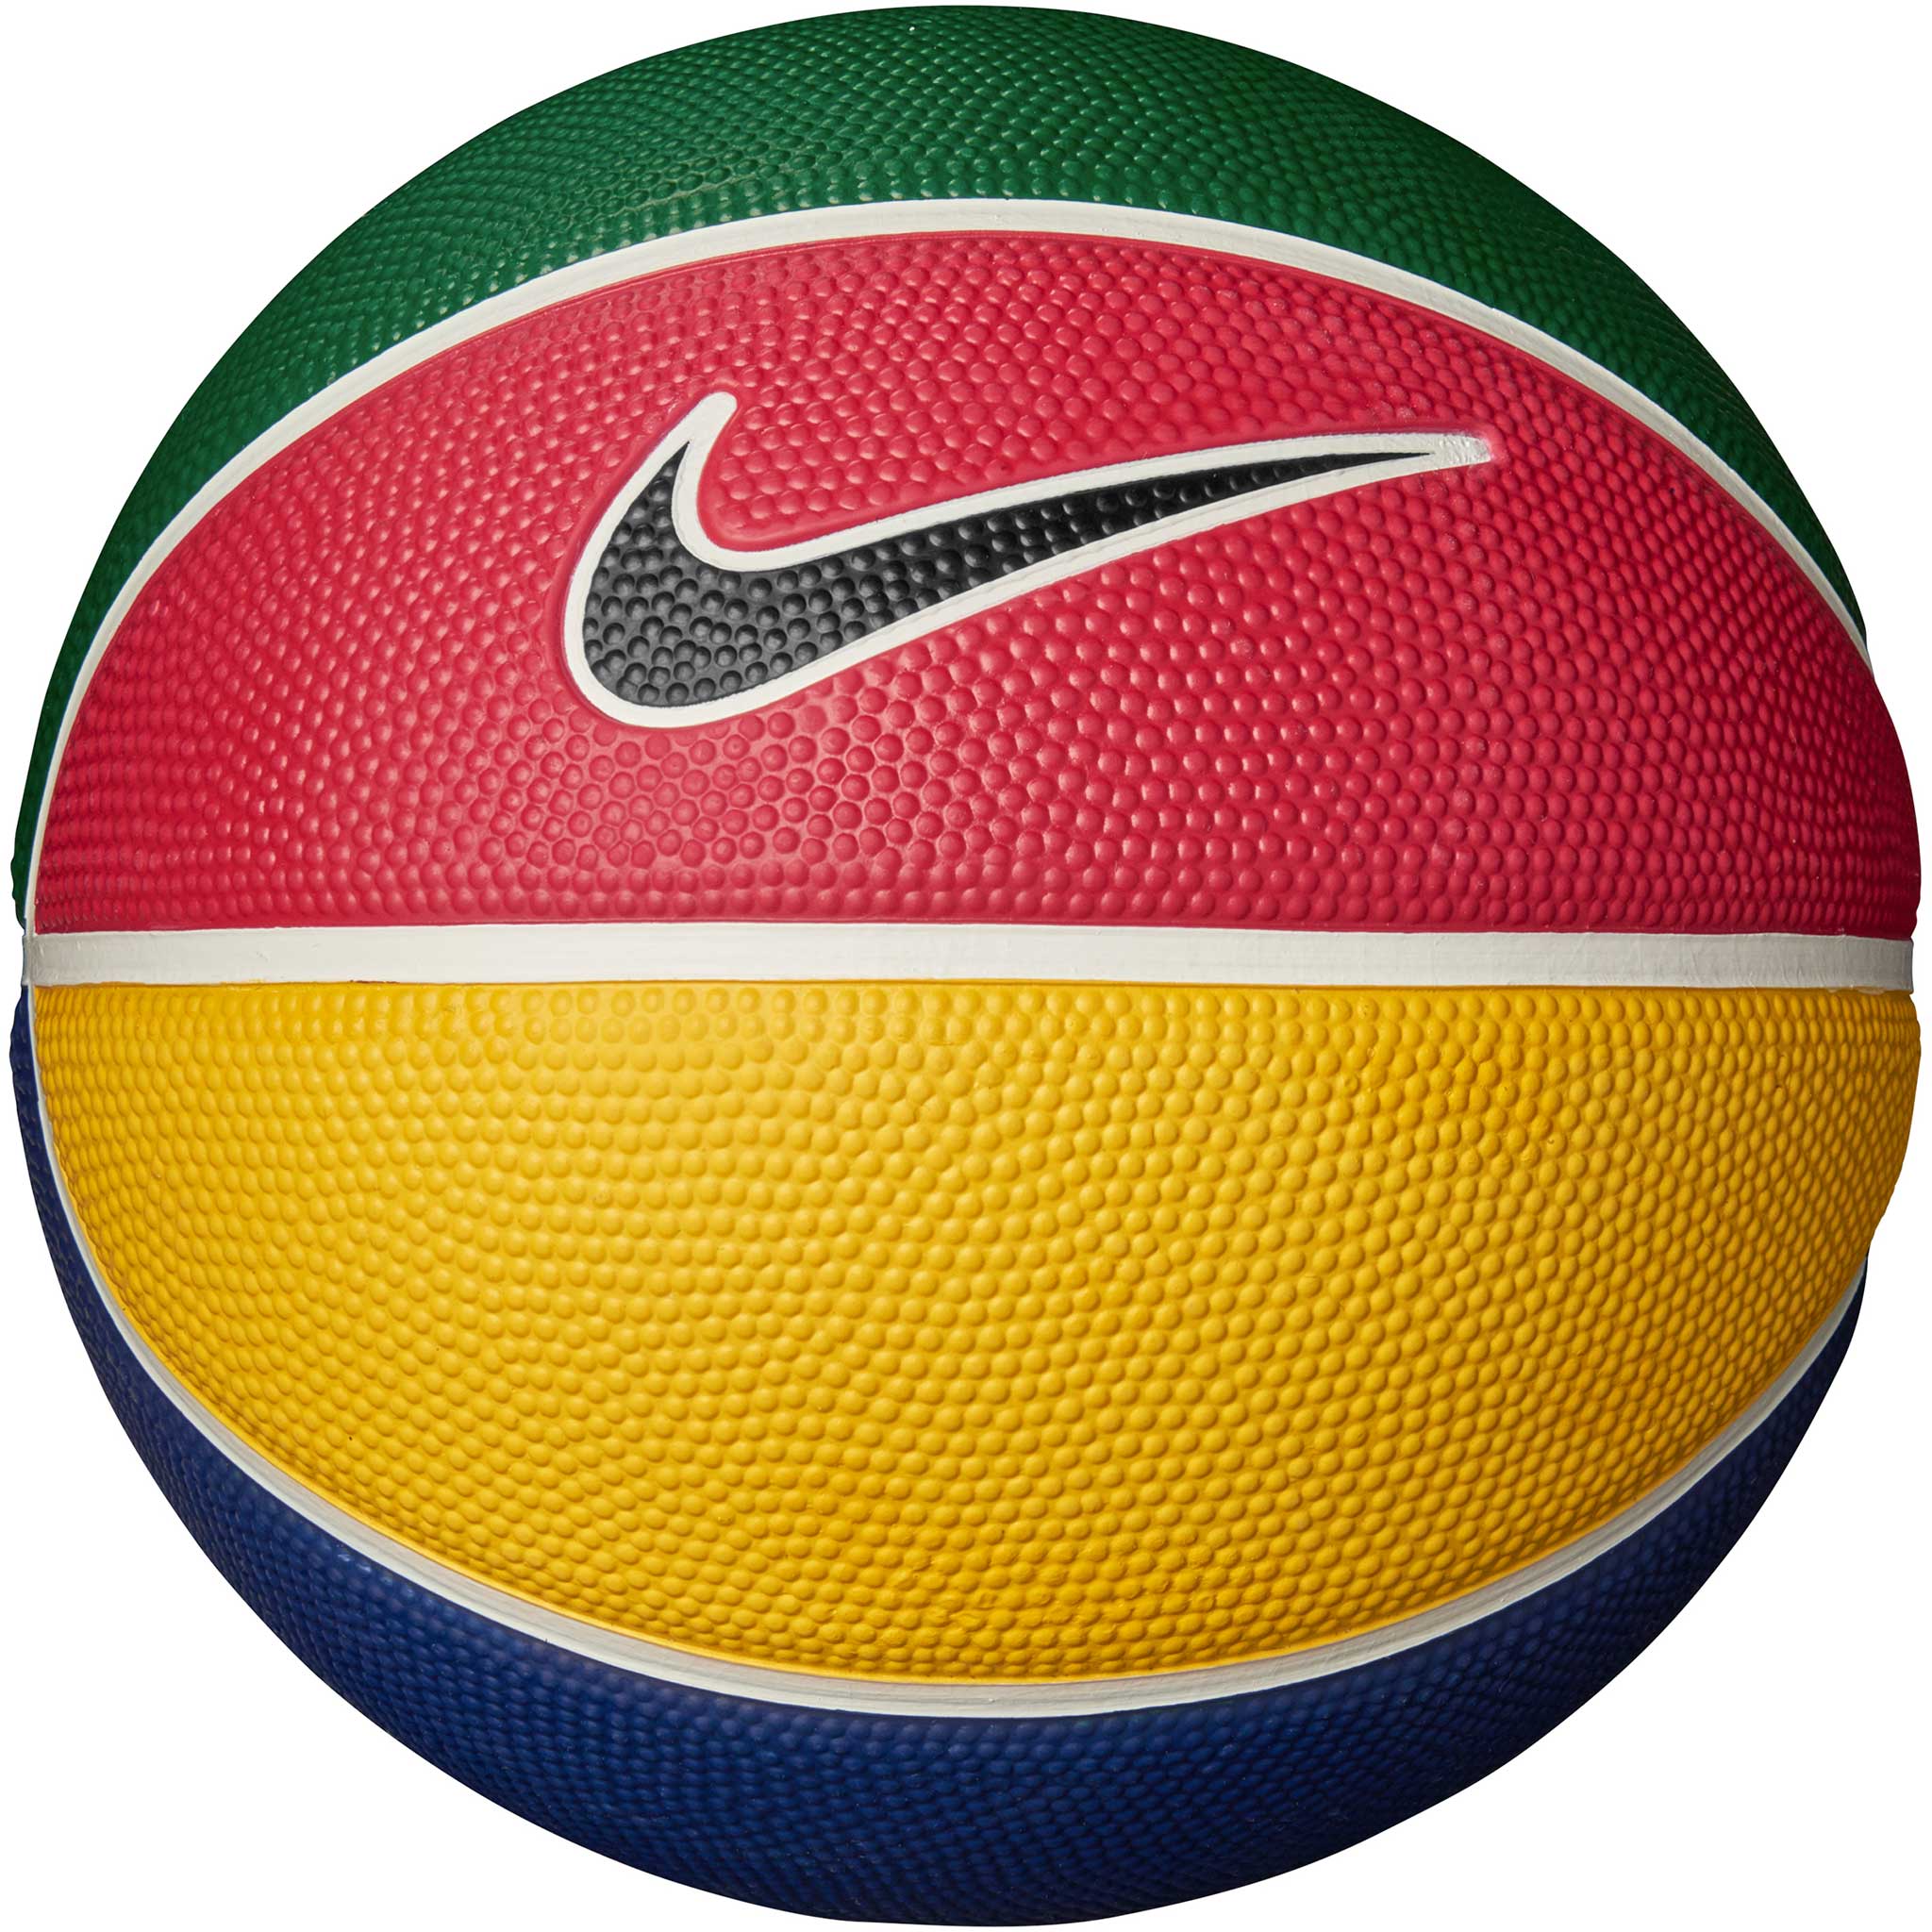 accessoires ballon nike ballon nike basketball t.7 blk/red/wht.